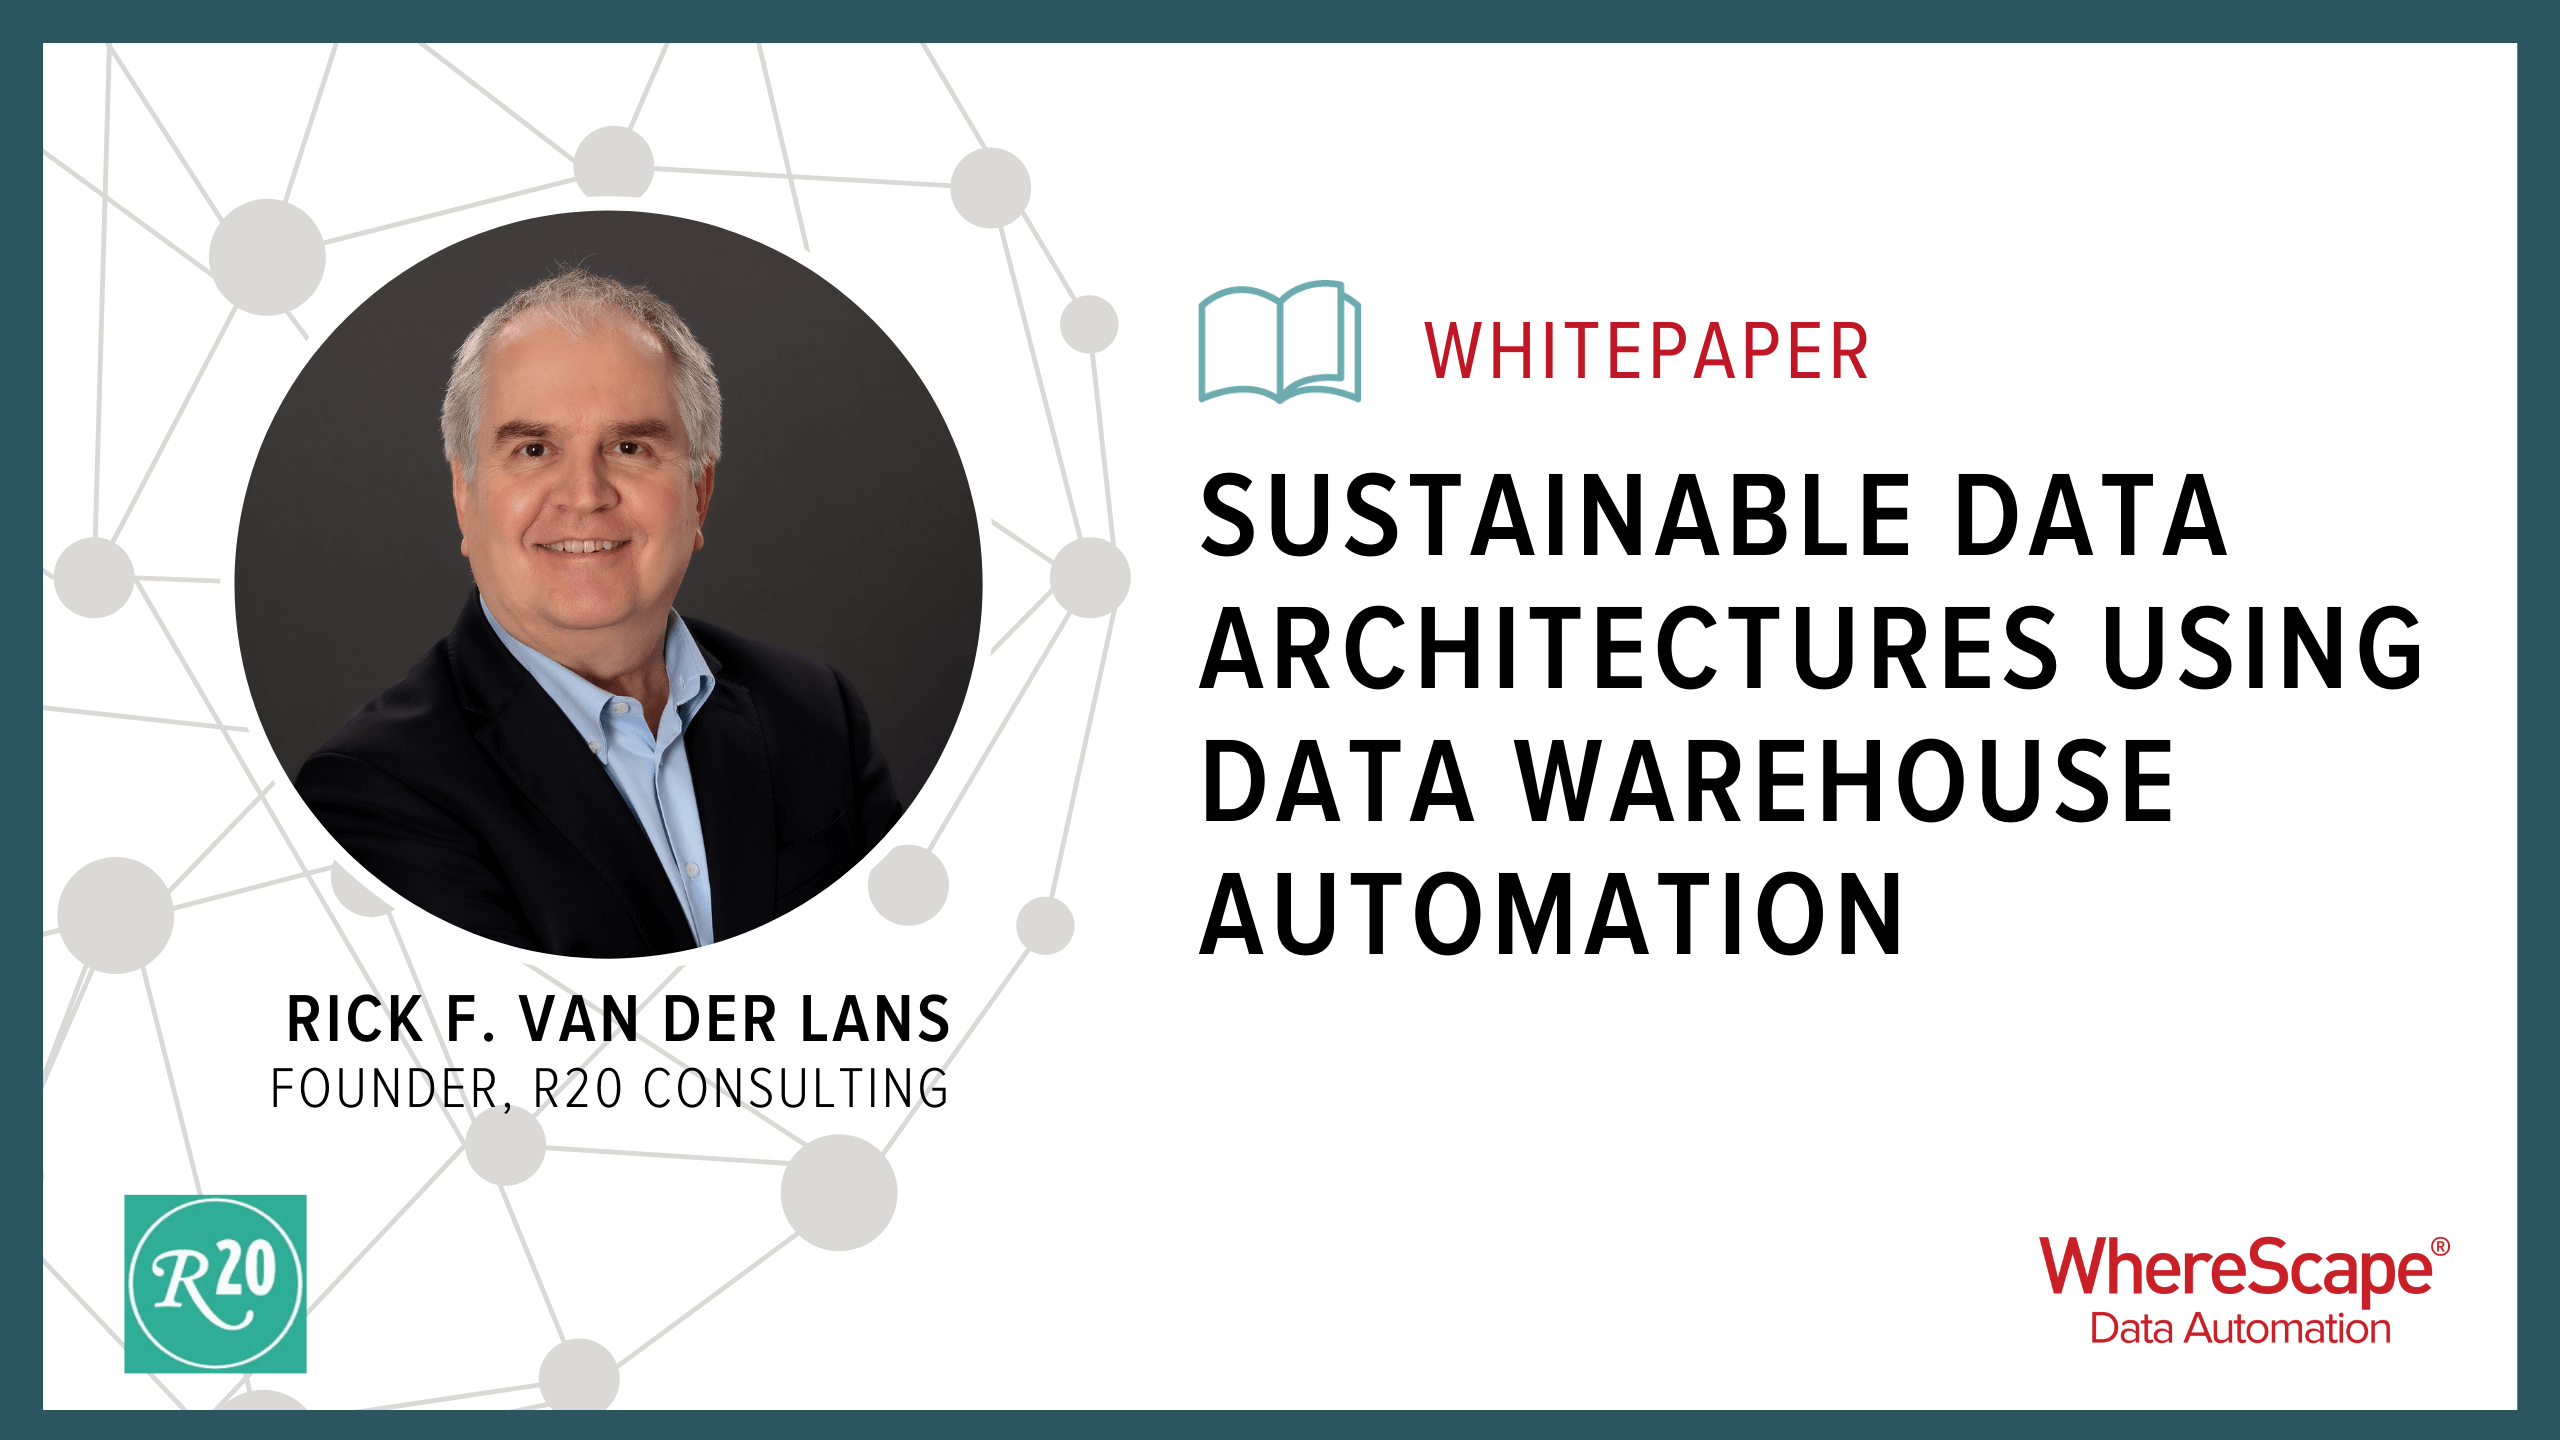 Whitepaper: Sustainable Data Architectures Using Data Warehouse Automation